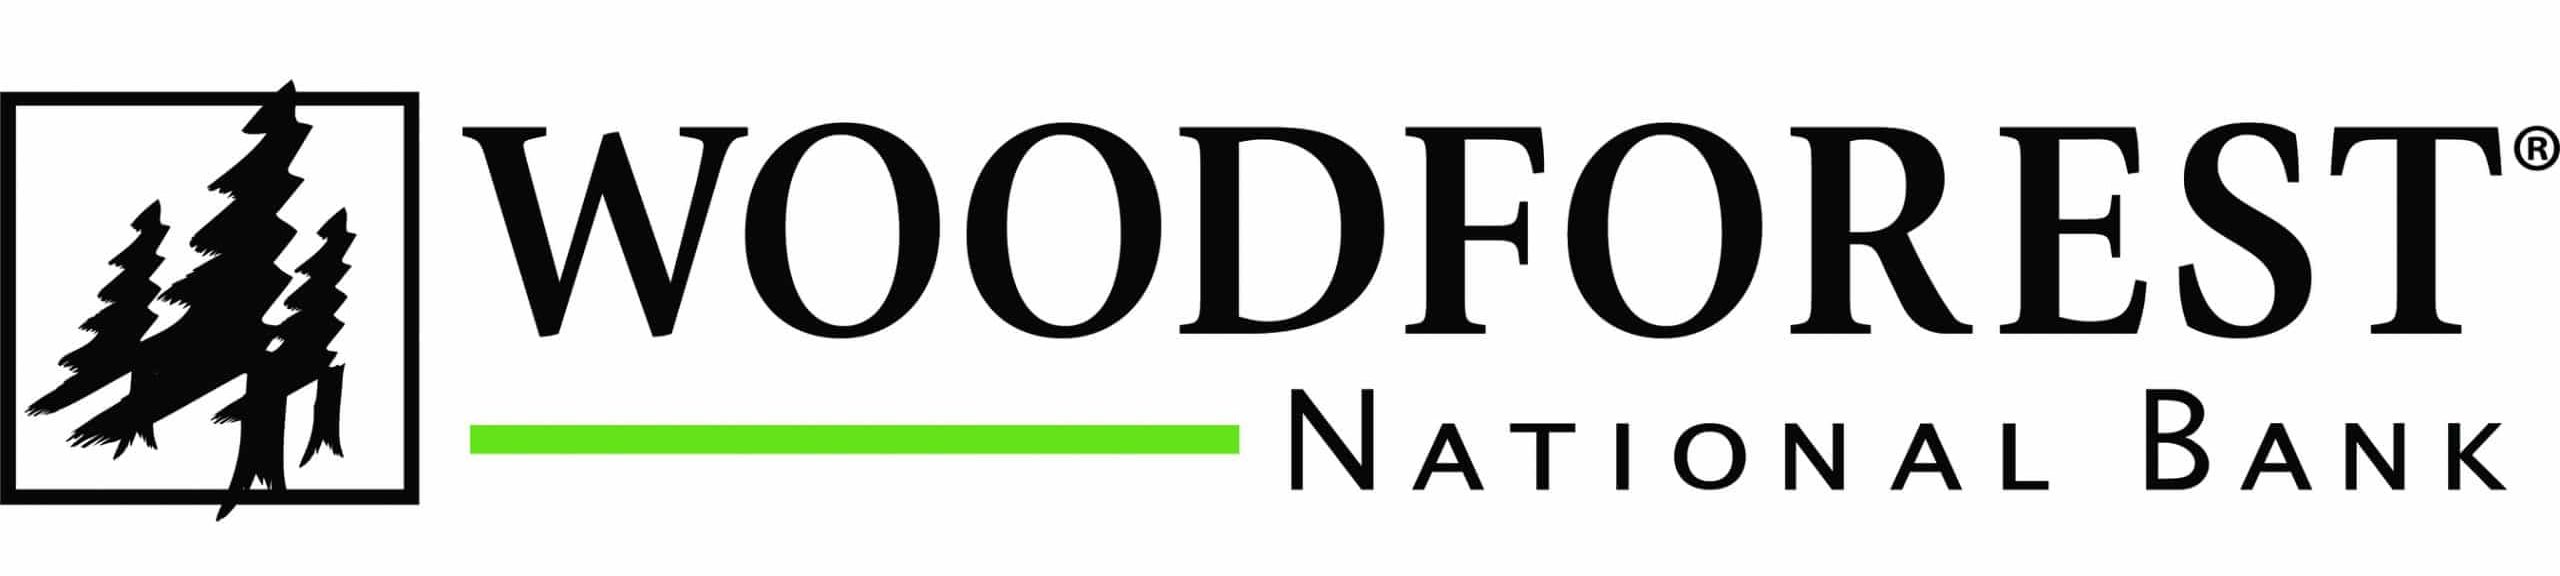 Logotipo del Banco Nacional de Woodforest